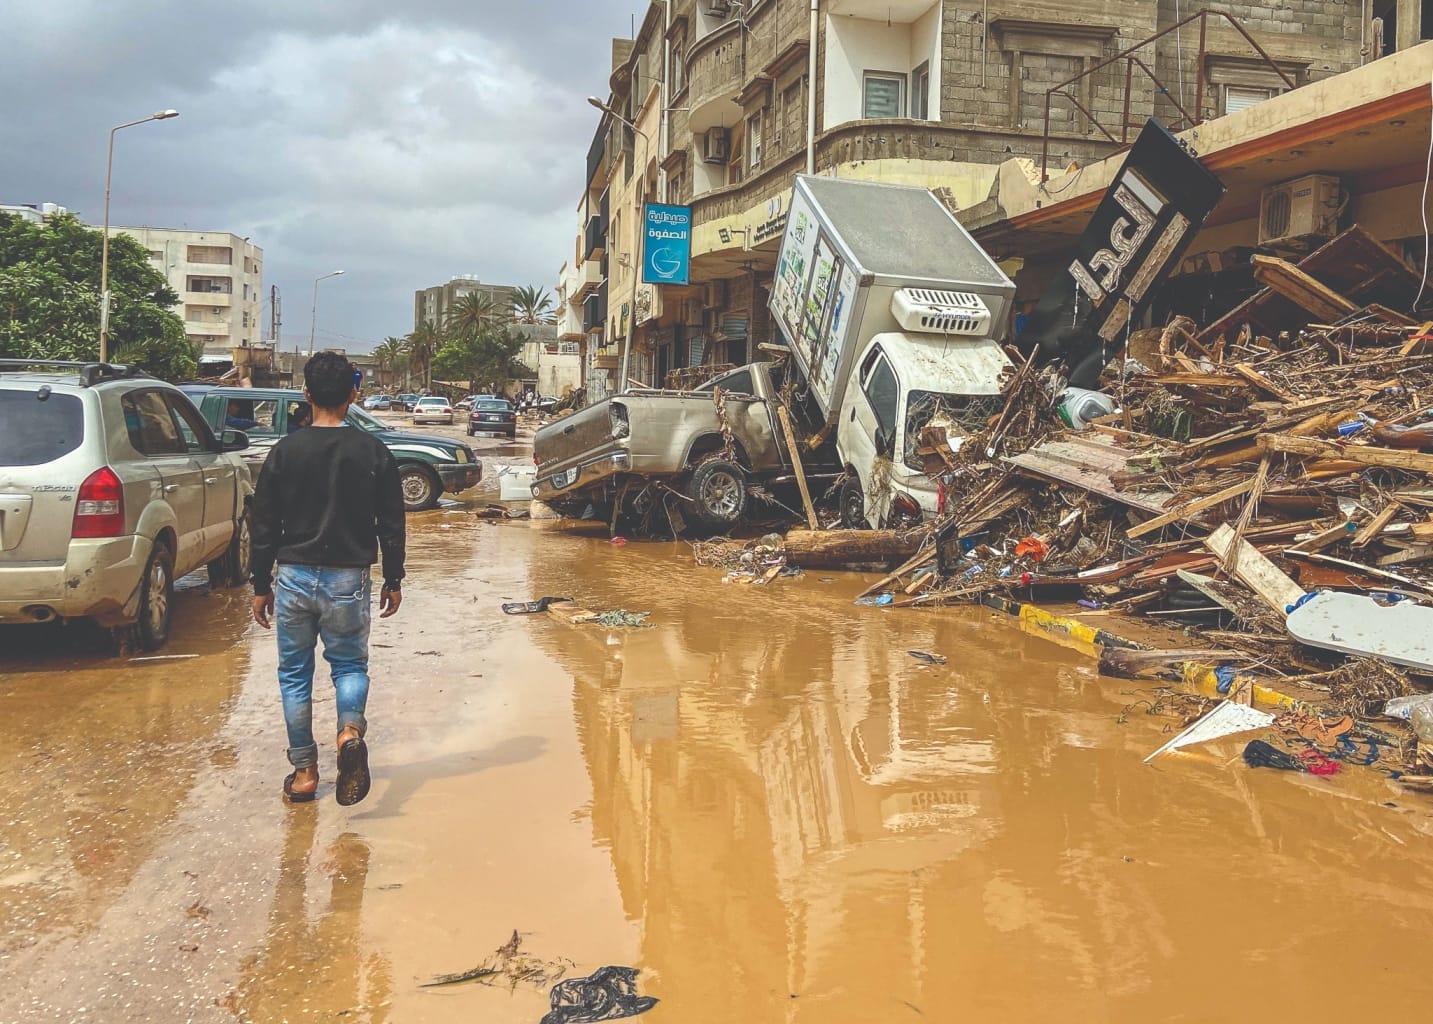 A survivor walks the streets of Derna shortly after the floods 